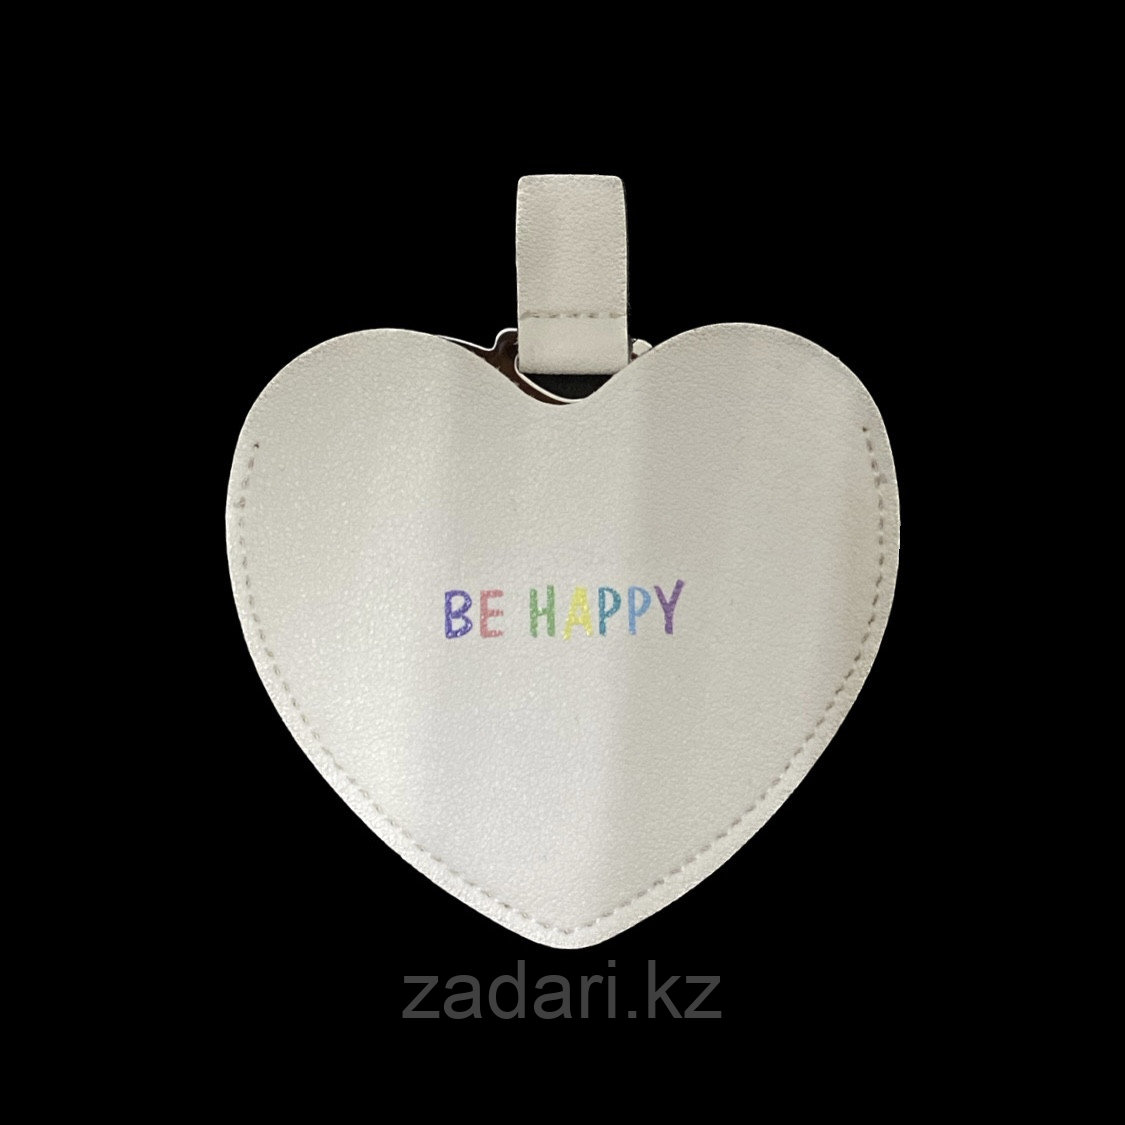 Зеркало «Be happy» сердце с чехлом